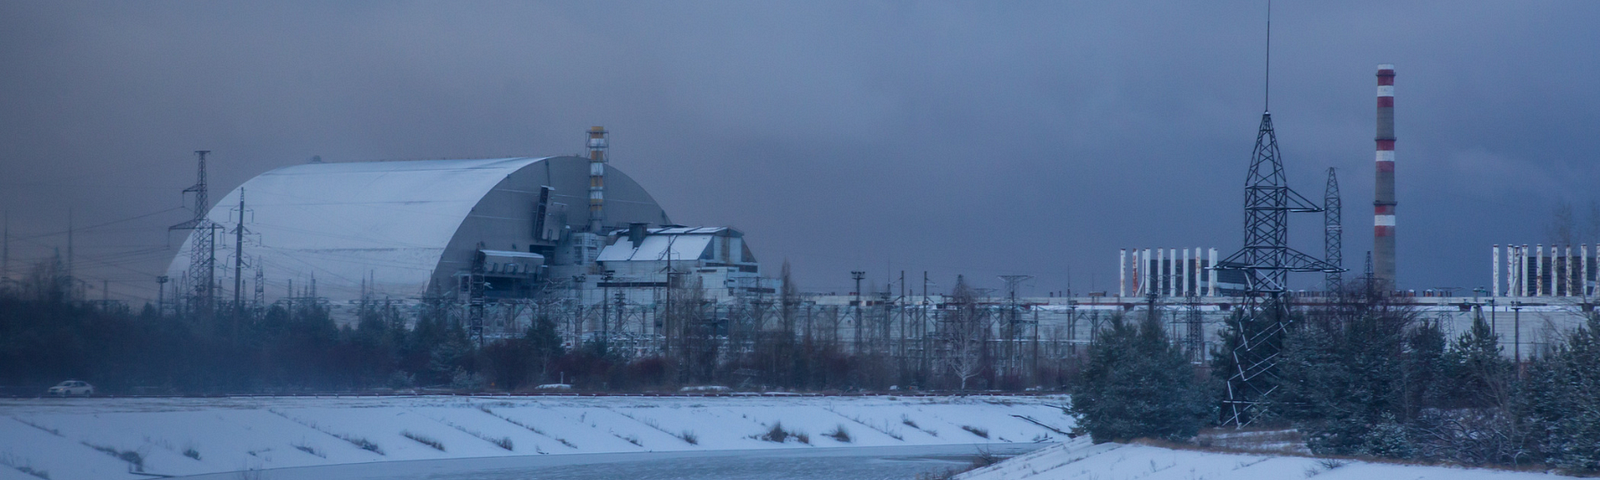 The Chernobyl nuclear complex in Pripyat, Ukraine.